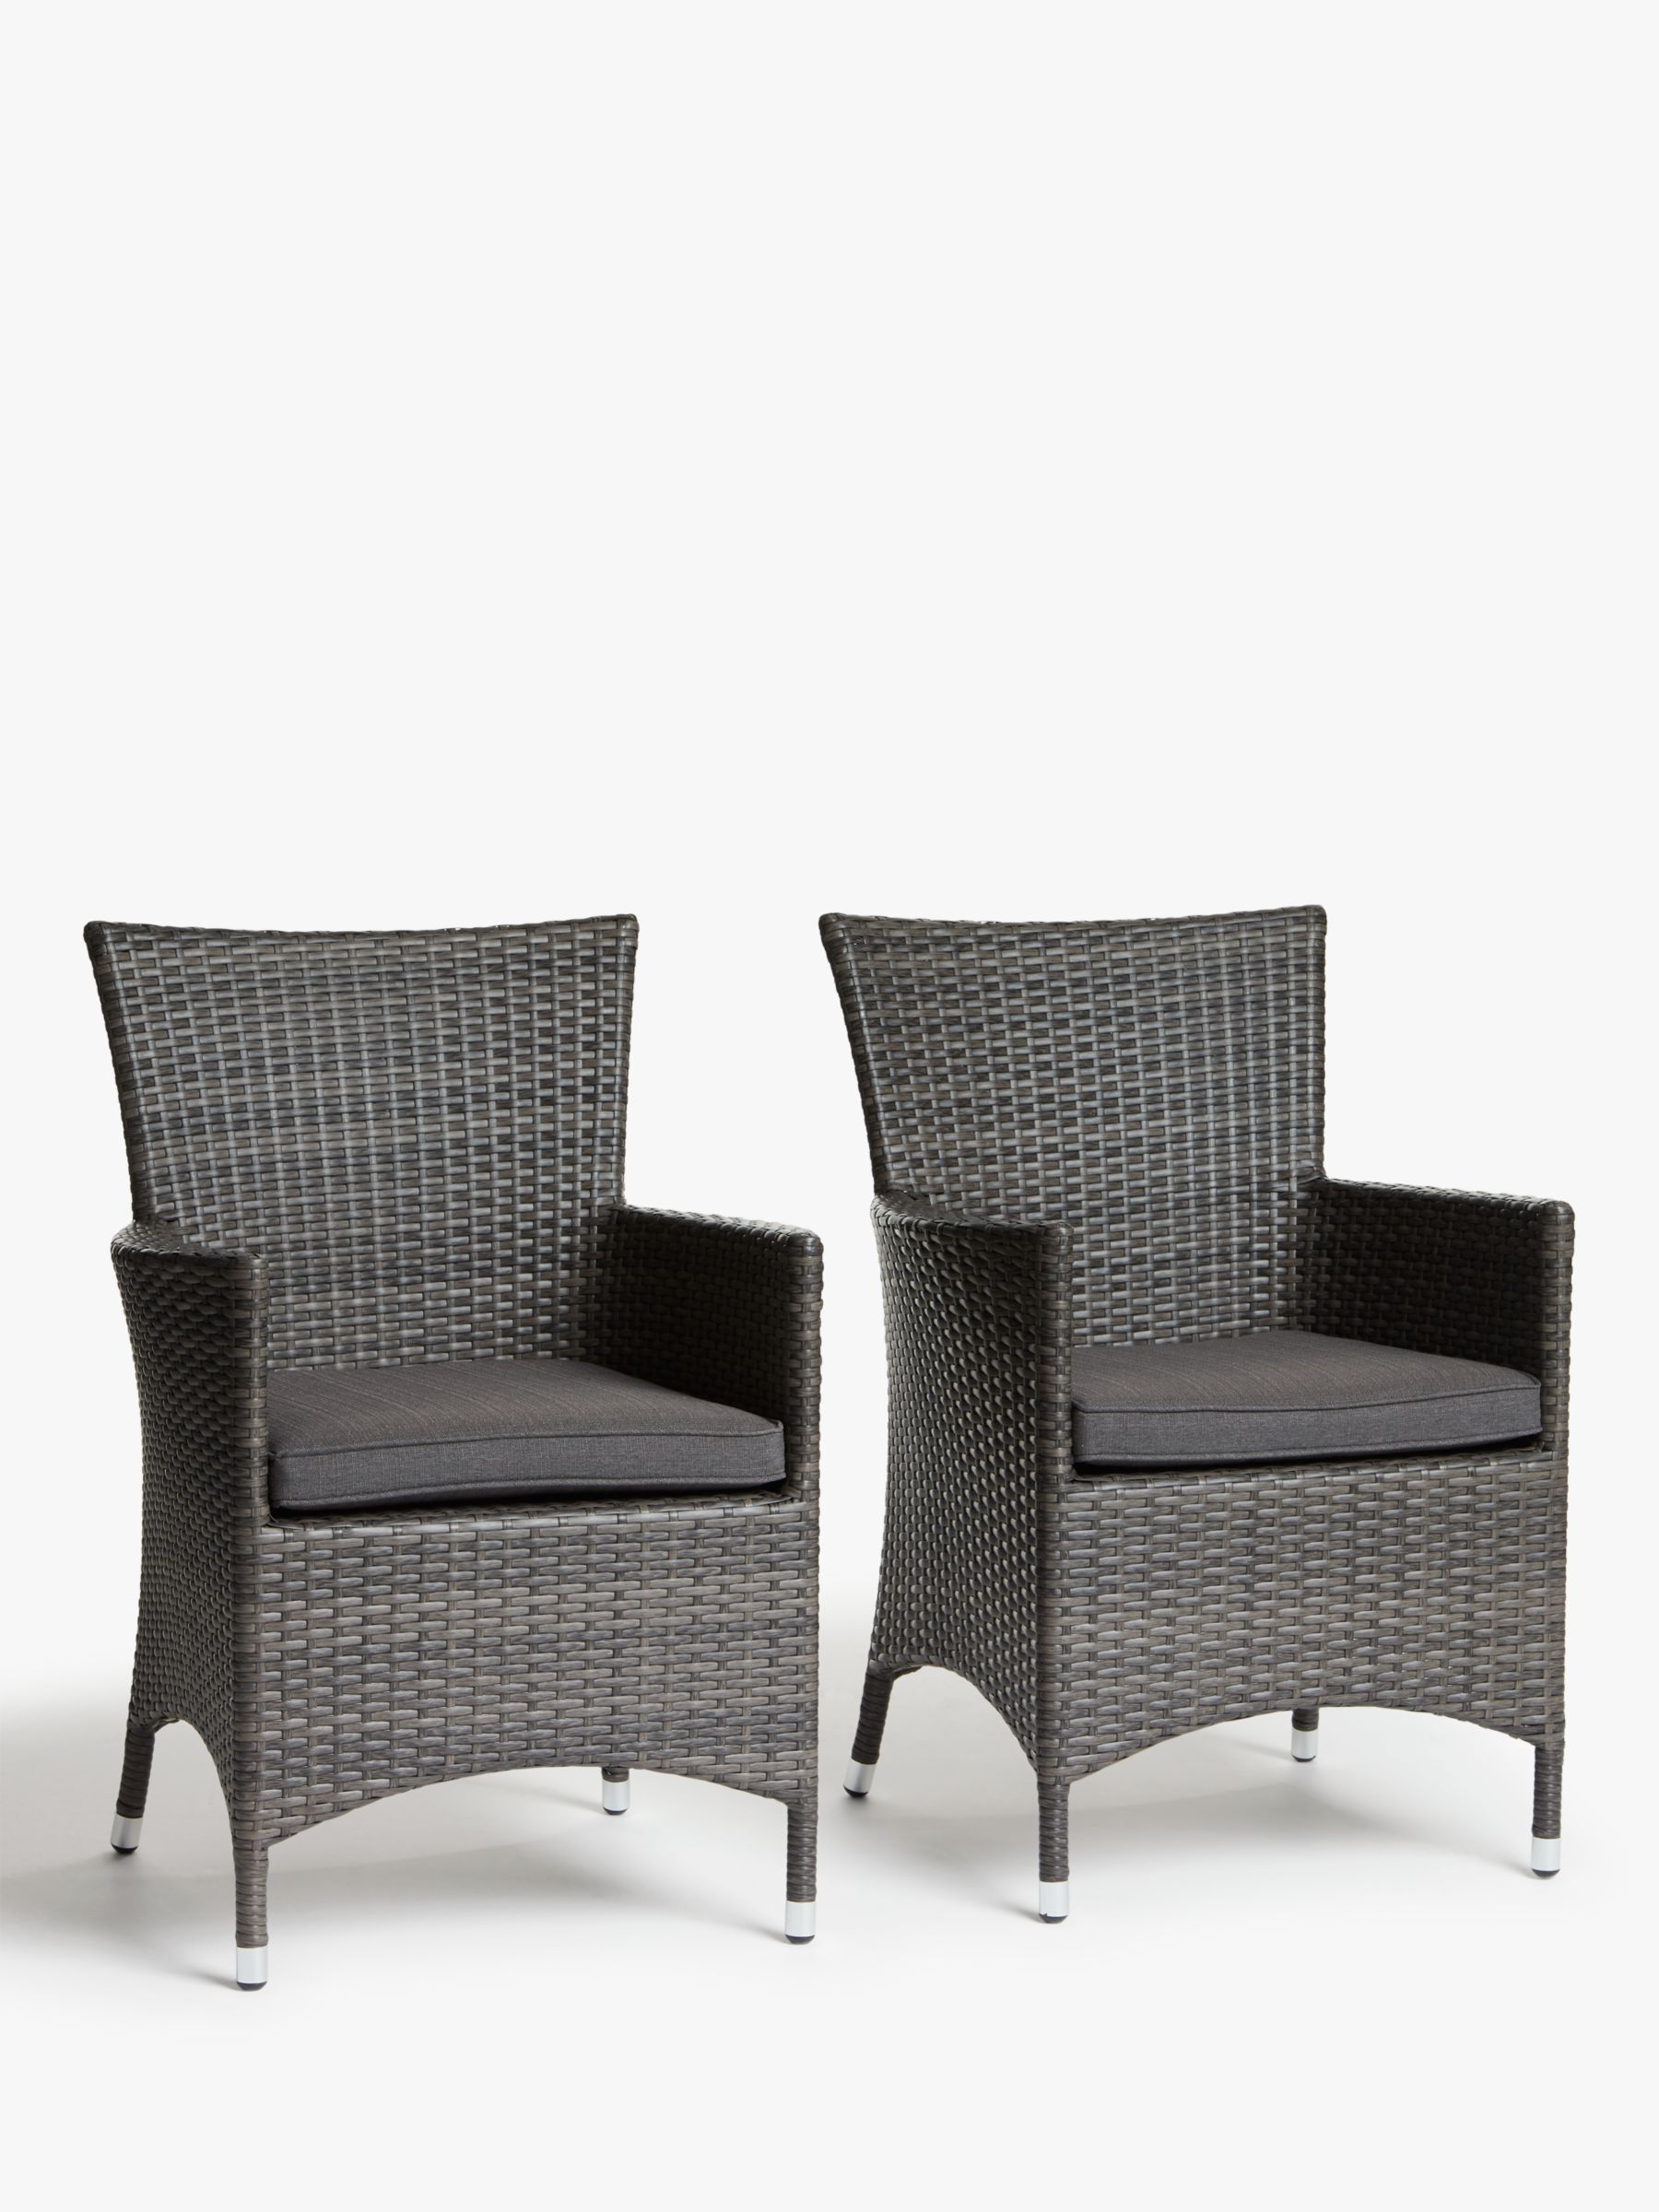 John Lewis & Partners Alora Garden Dining Chairs, Set of 2, Brown/Grey